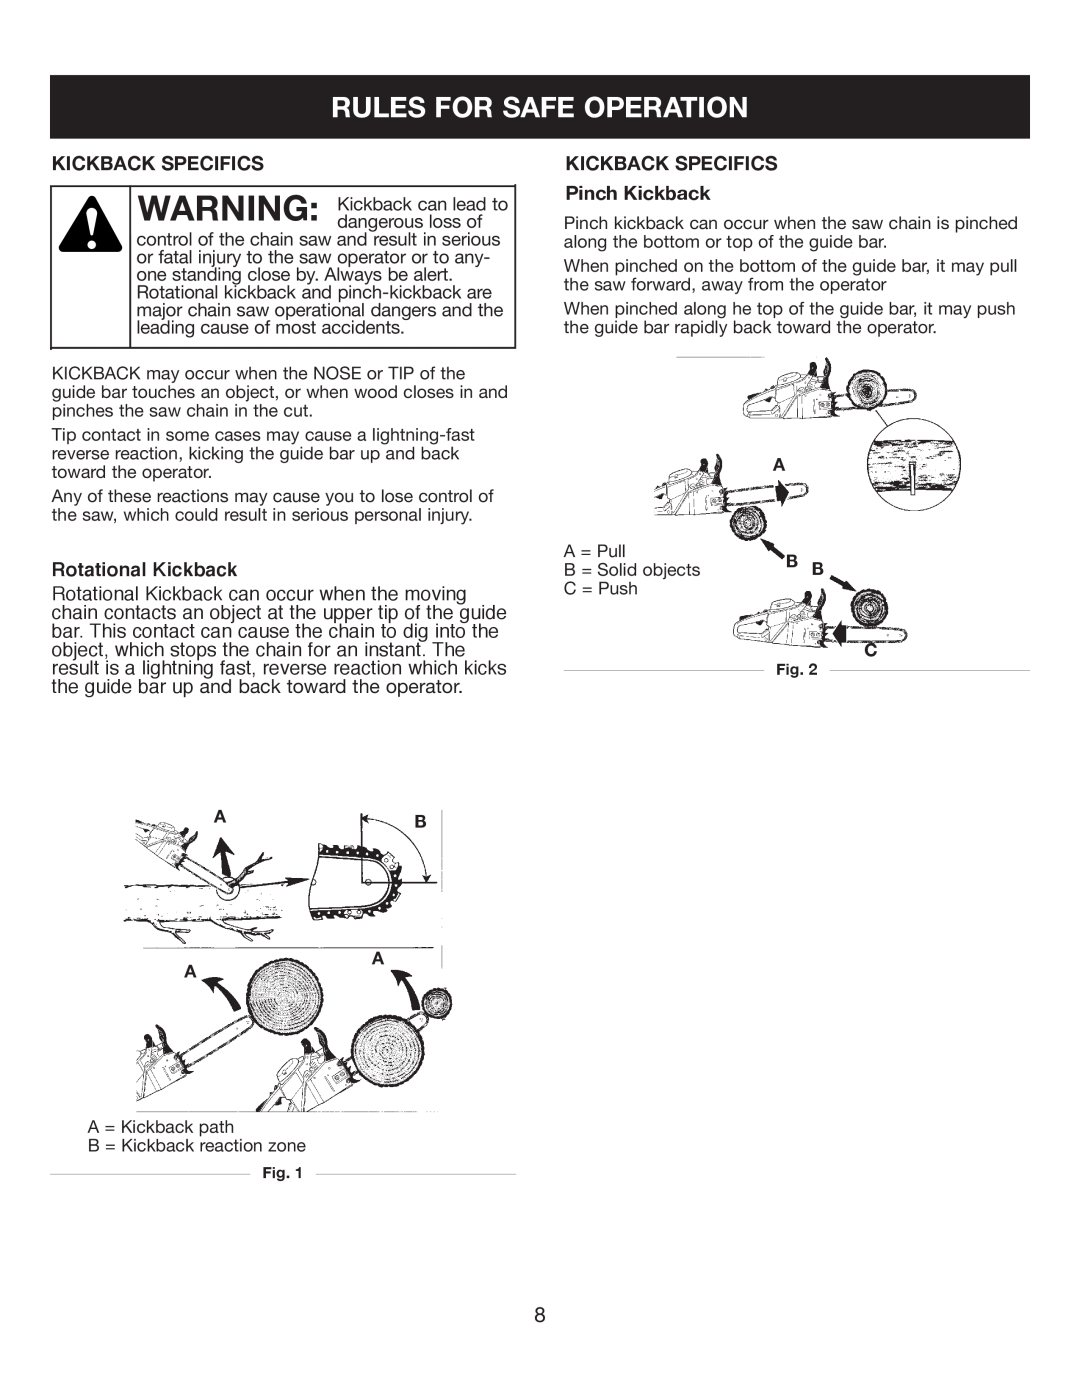 Sears 316.35084 manual Rules For Safe Operation, Kickback Specifics, Rotational Kickback, KICKBACK SPECIFICS Pinch Kickback 